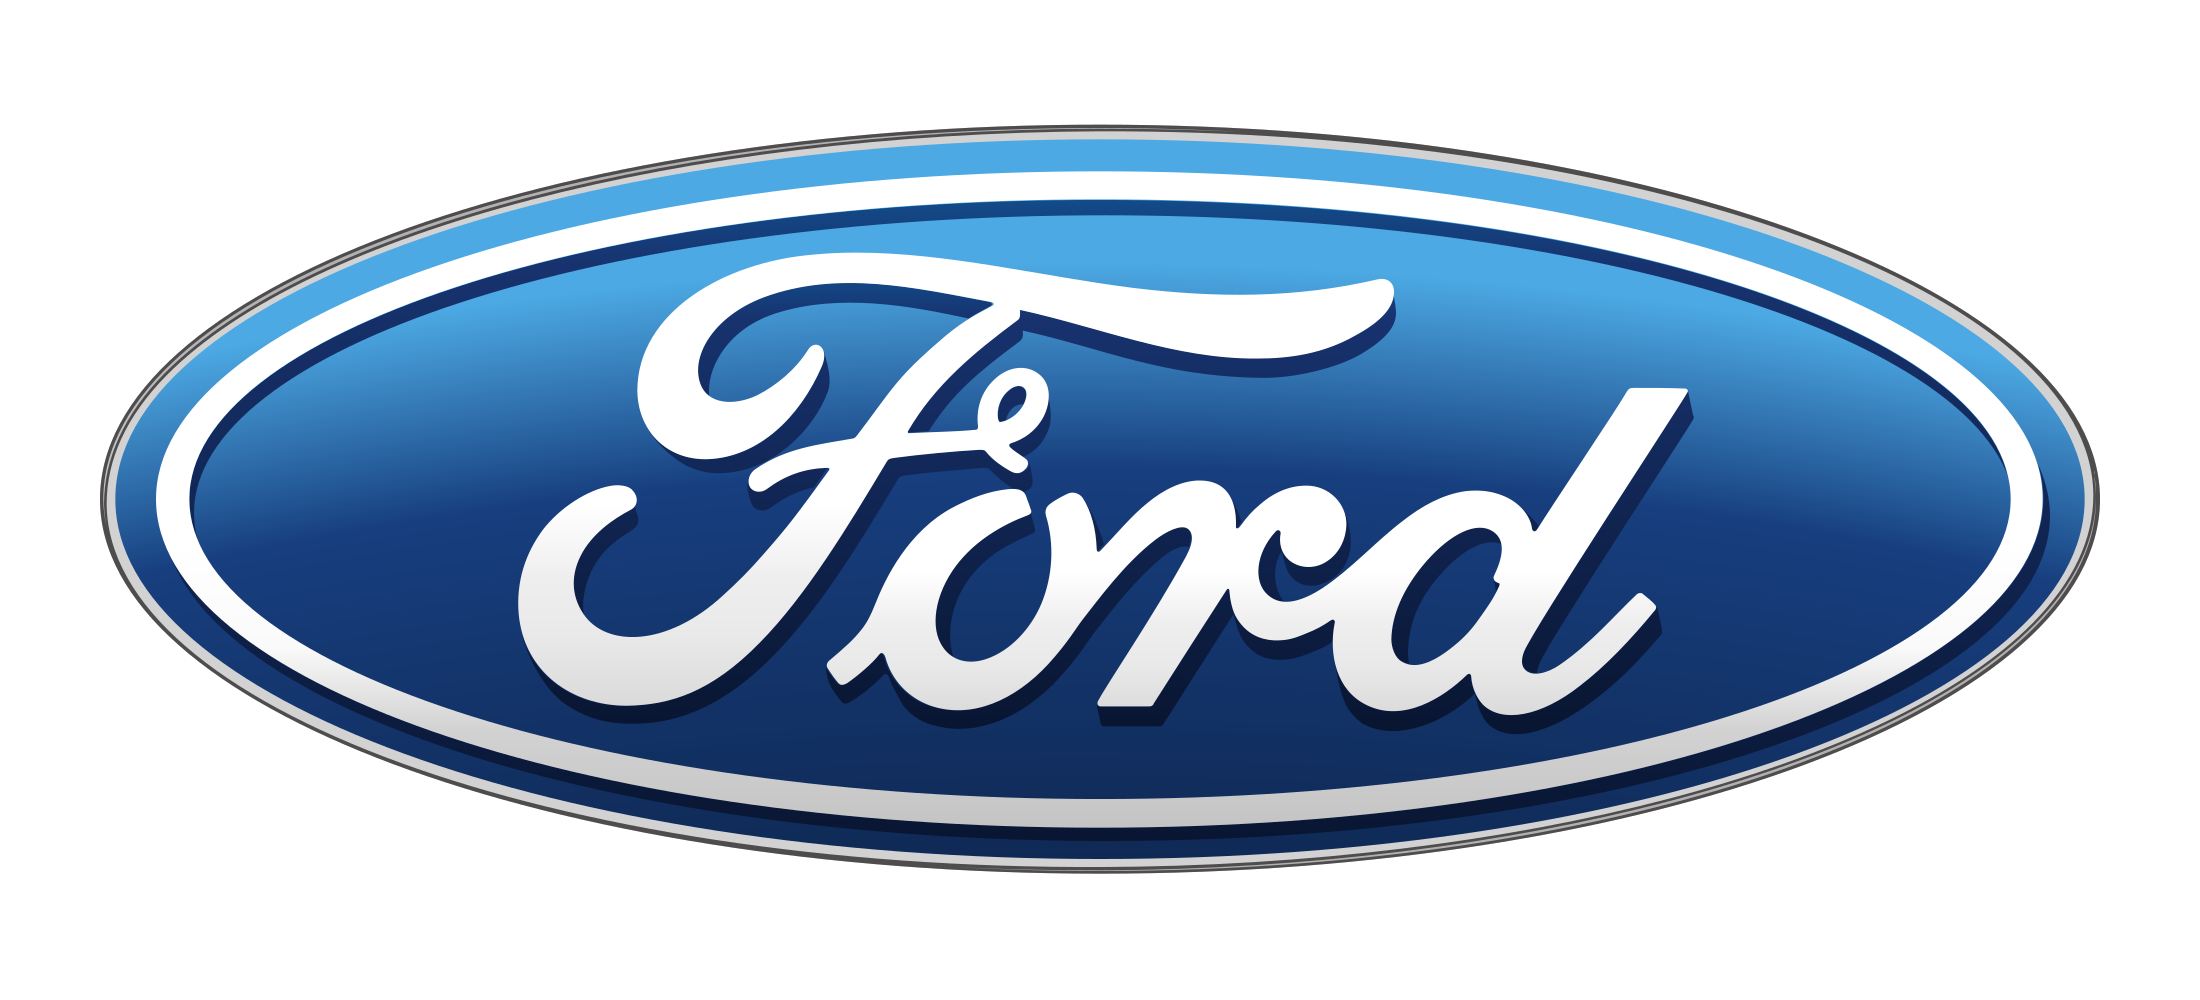 ford-logo-2003-1